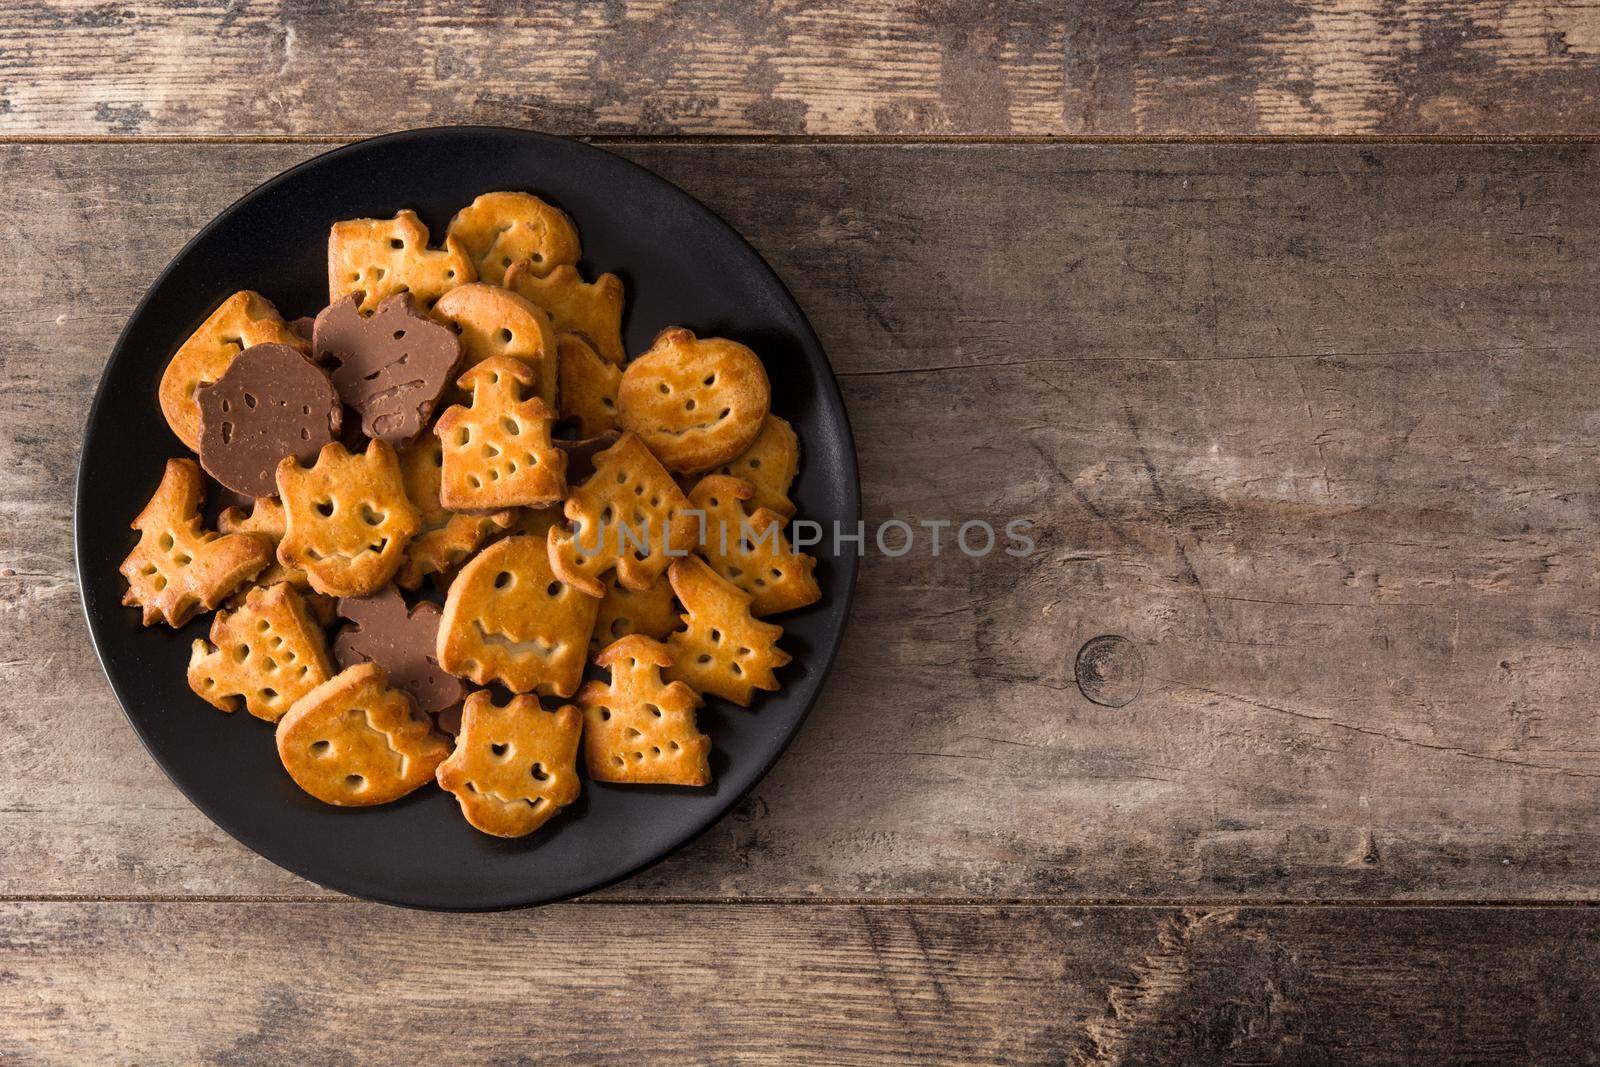 Funny Halloween cookies  by chandlervid85